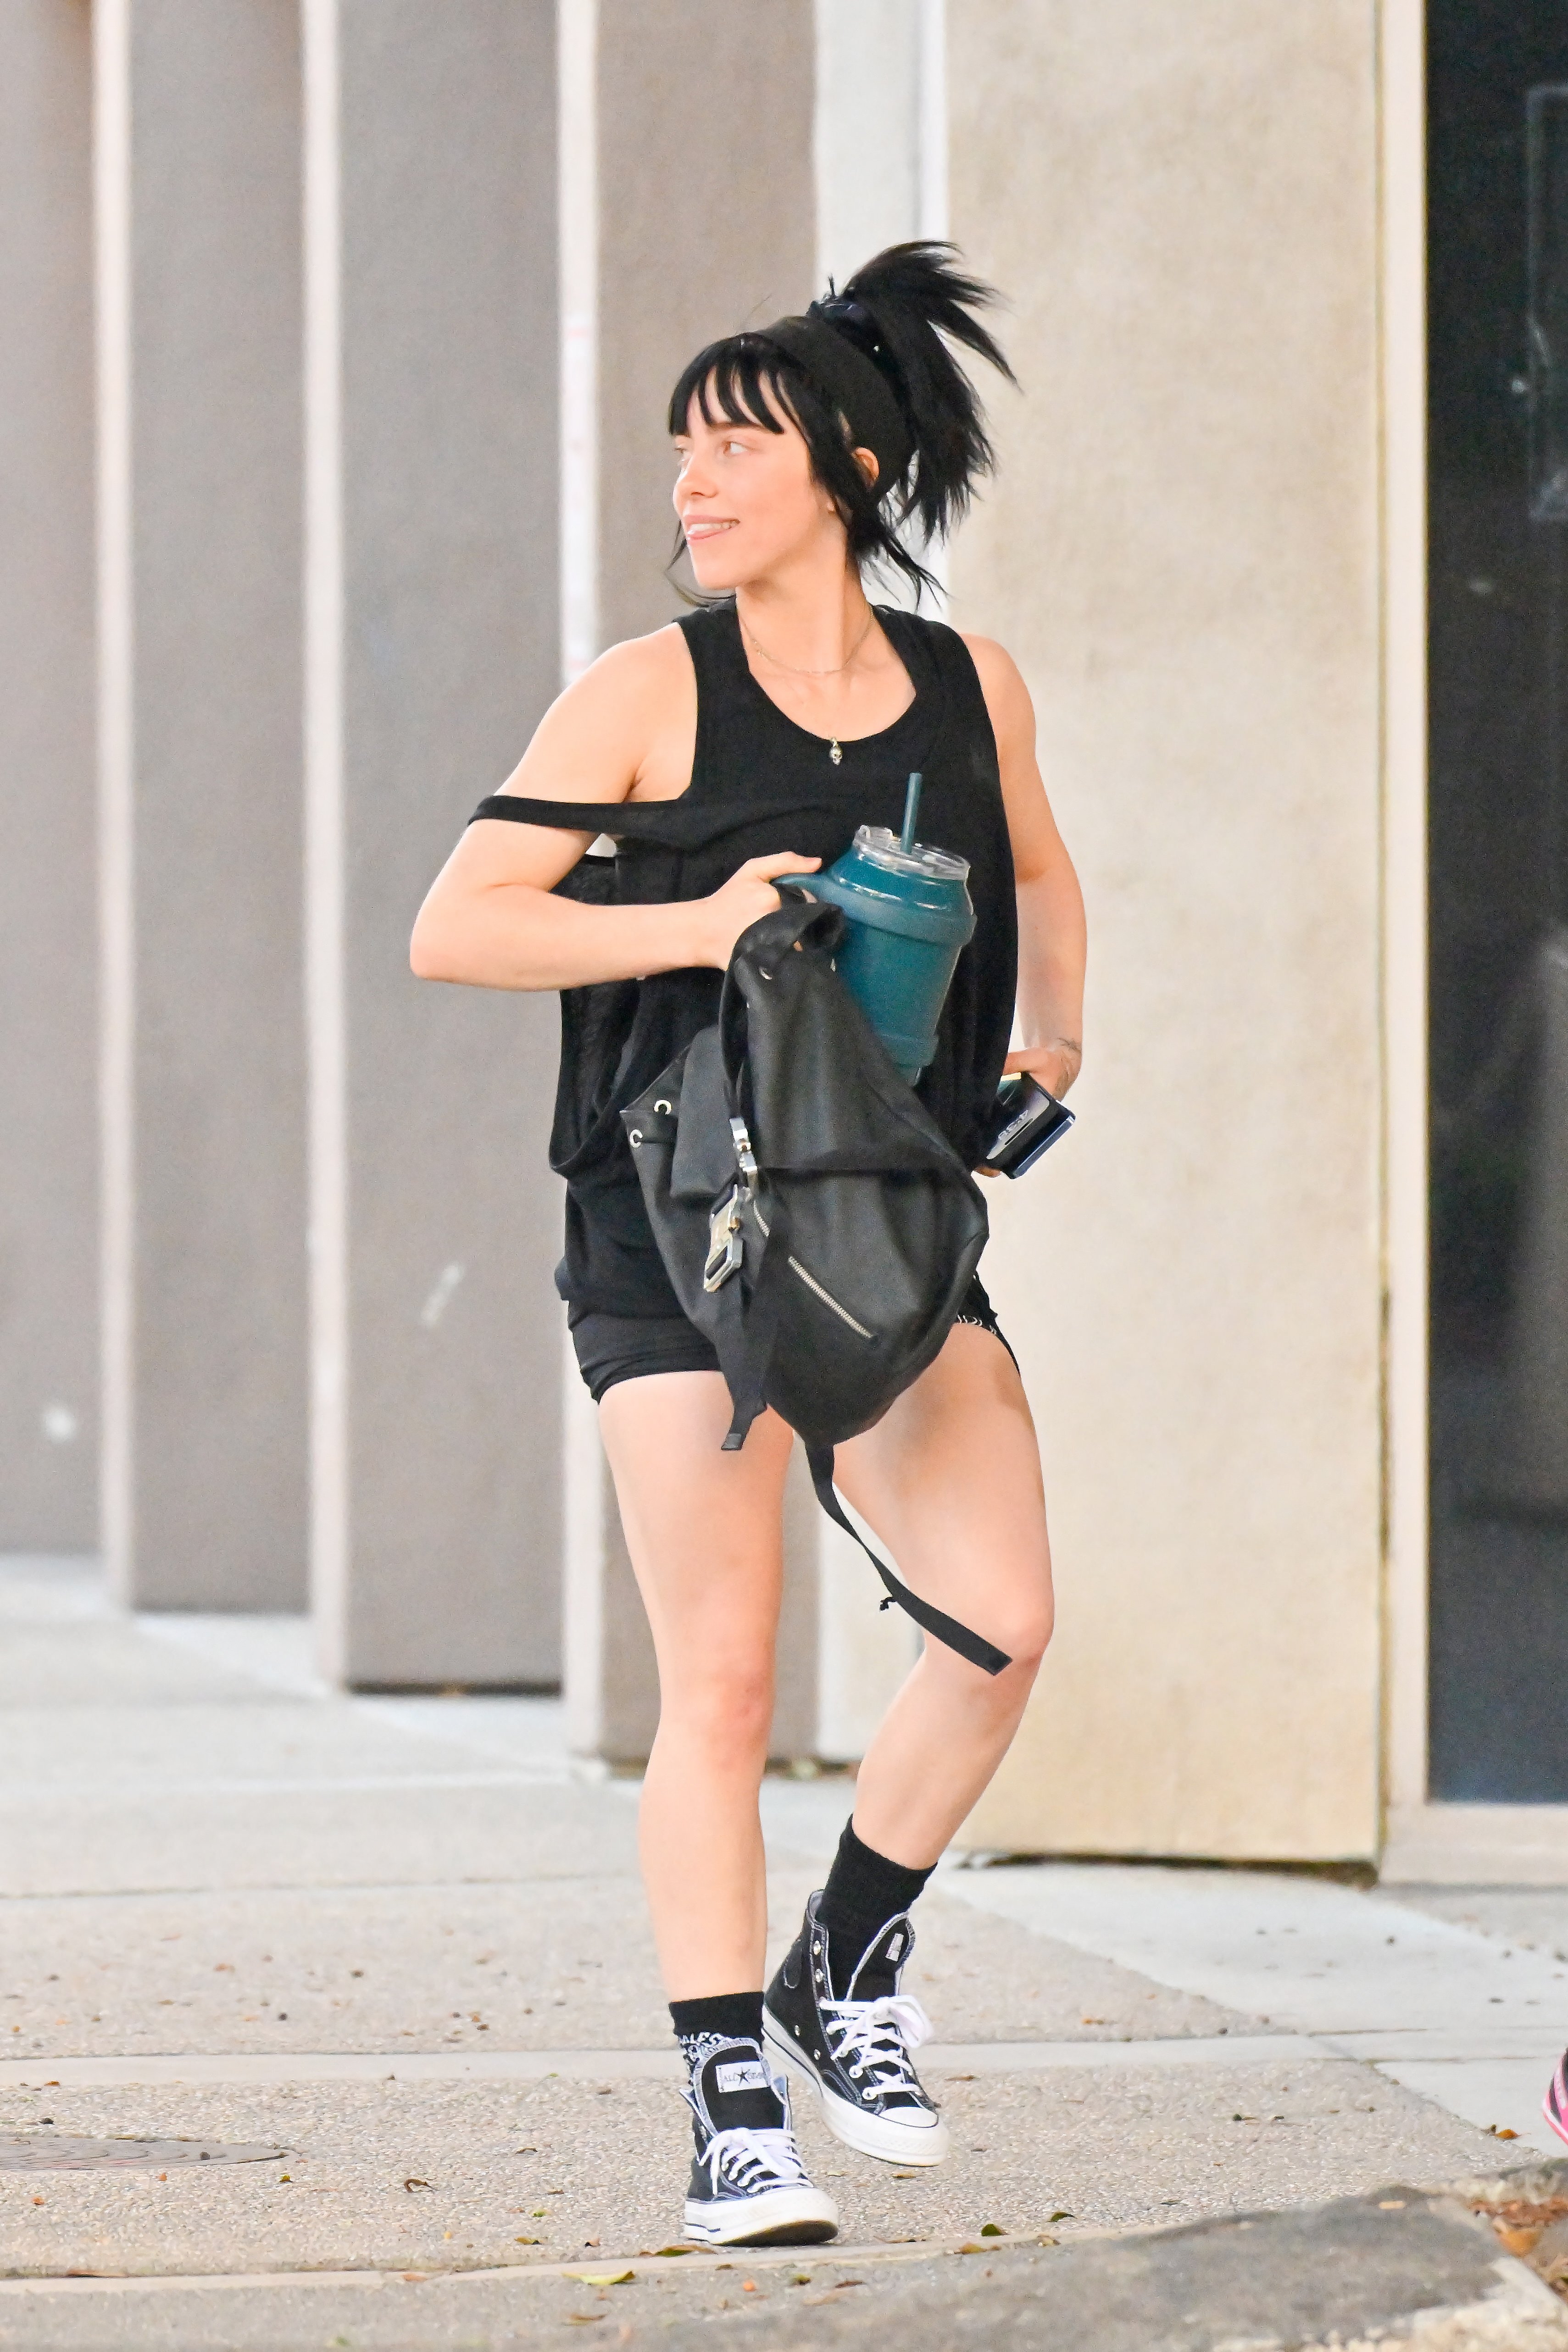 Billie Eilish Wears Tank Top, Shorts Leaving Gym: Photos | Life & Style